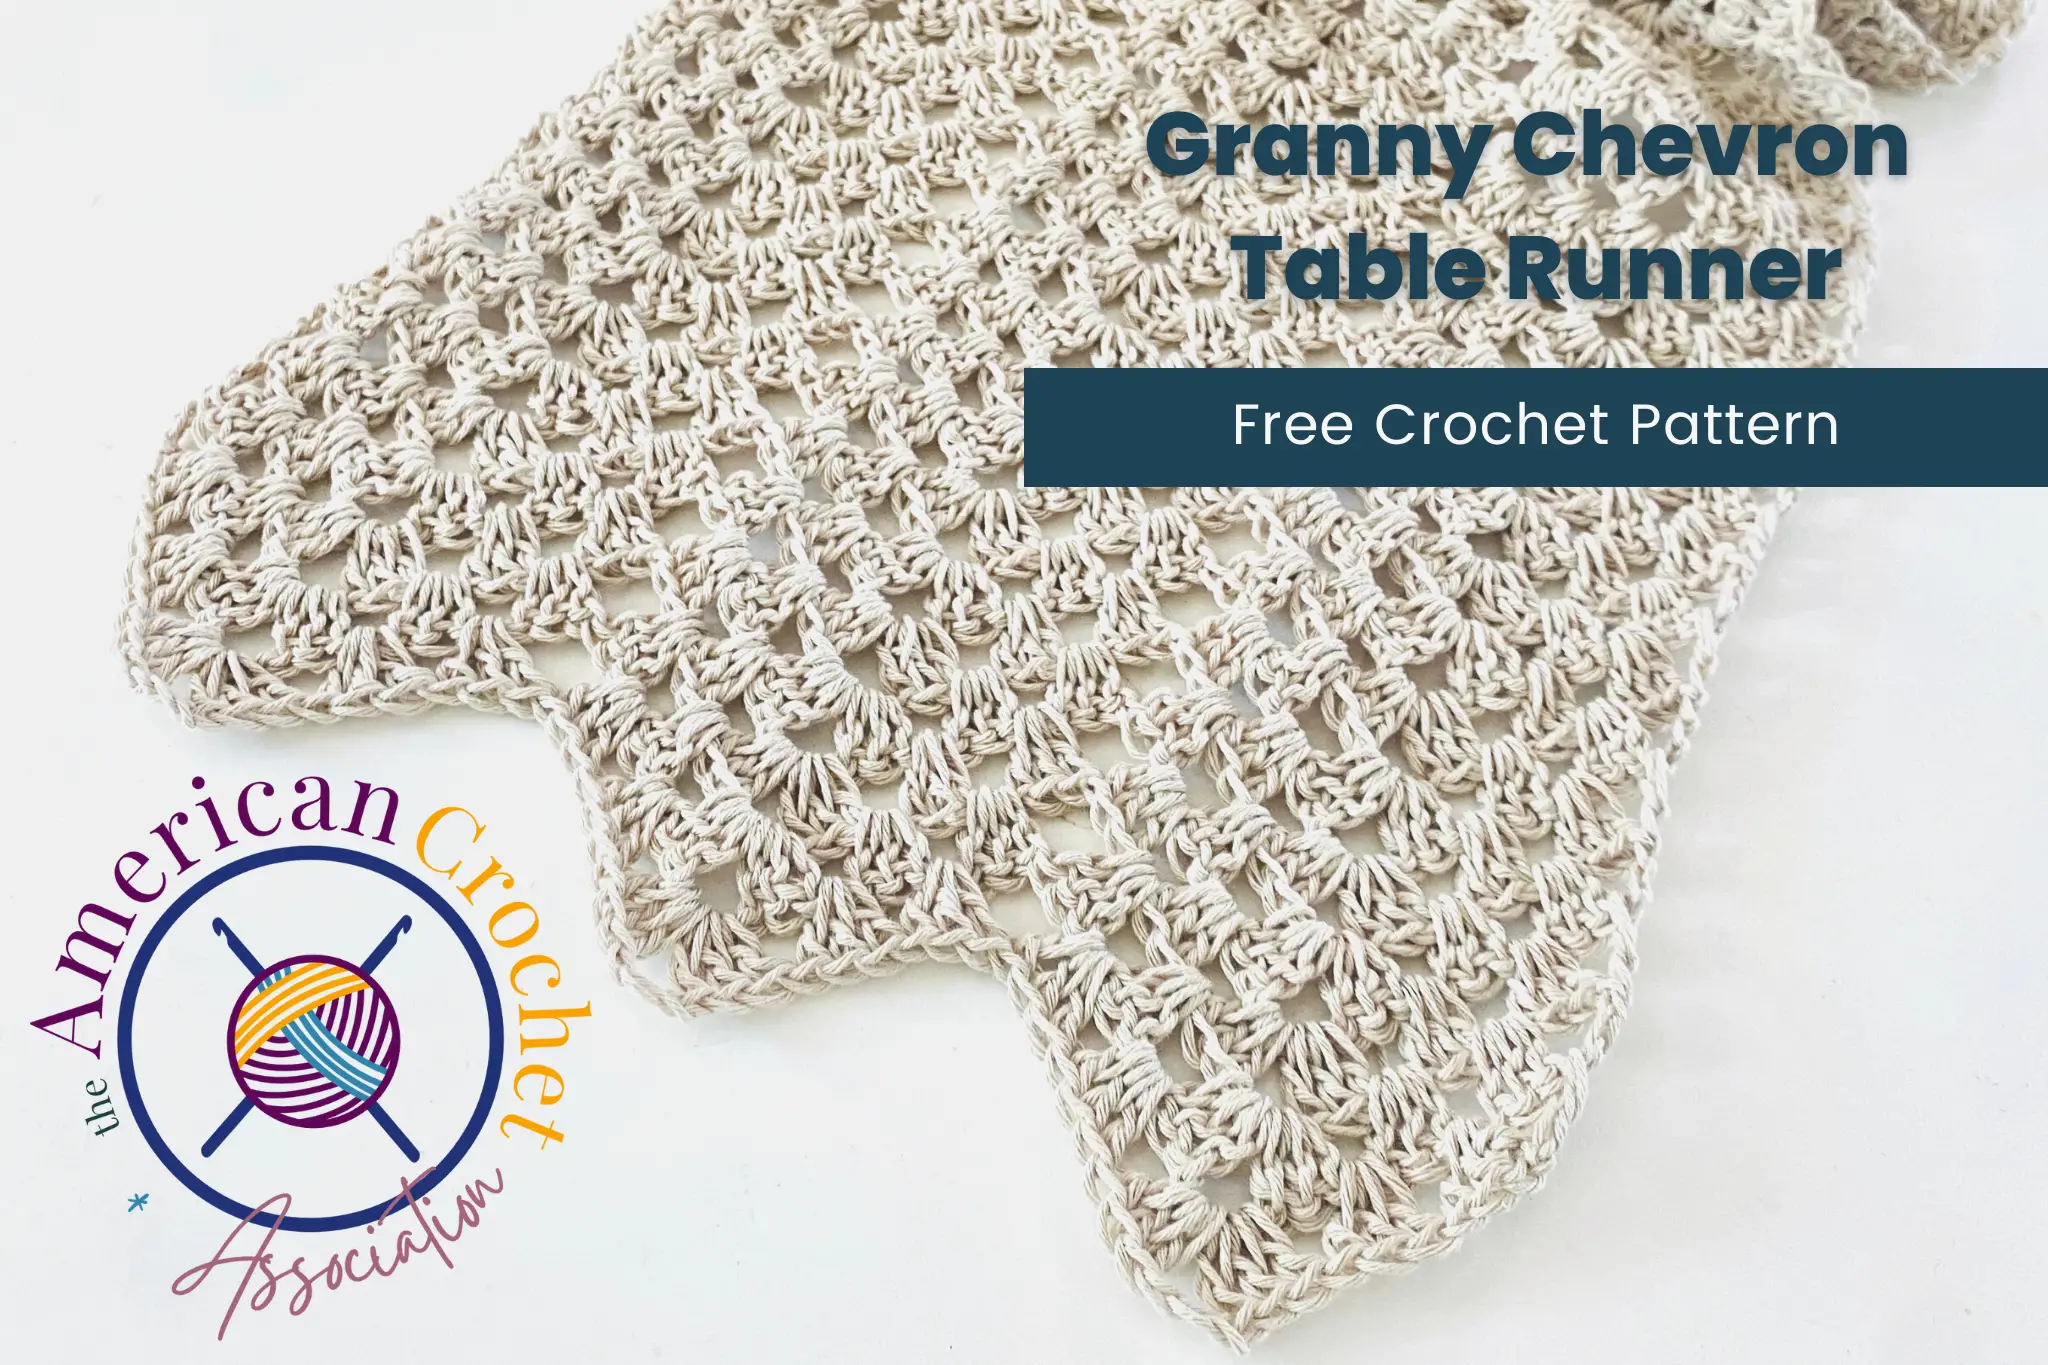 Granny Chevron Table Runner Free Crochet Pattern